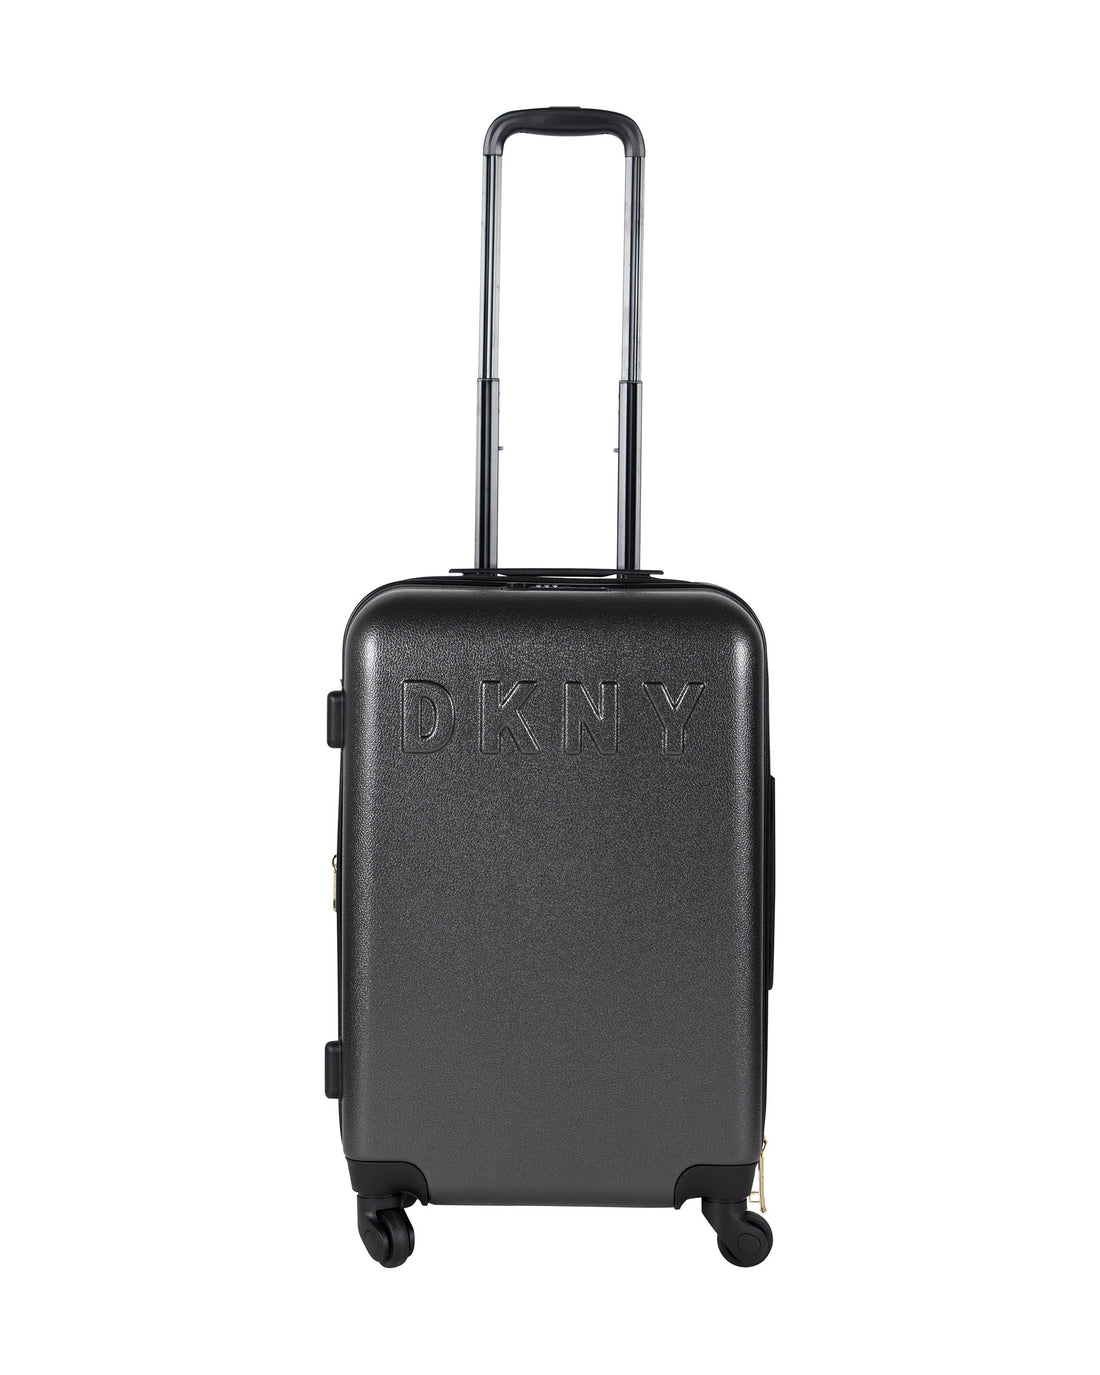 DKNY Black Medium Luggage